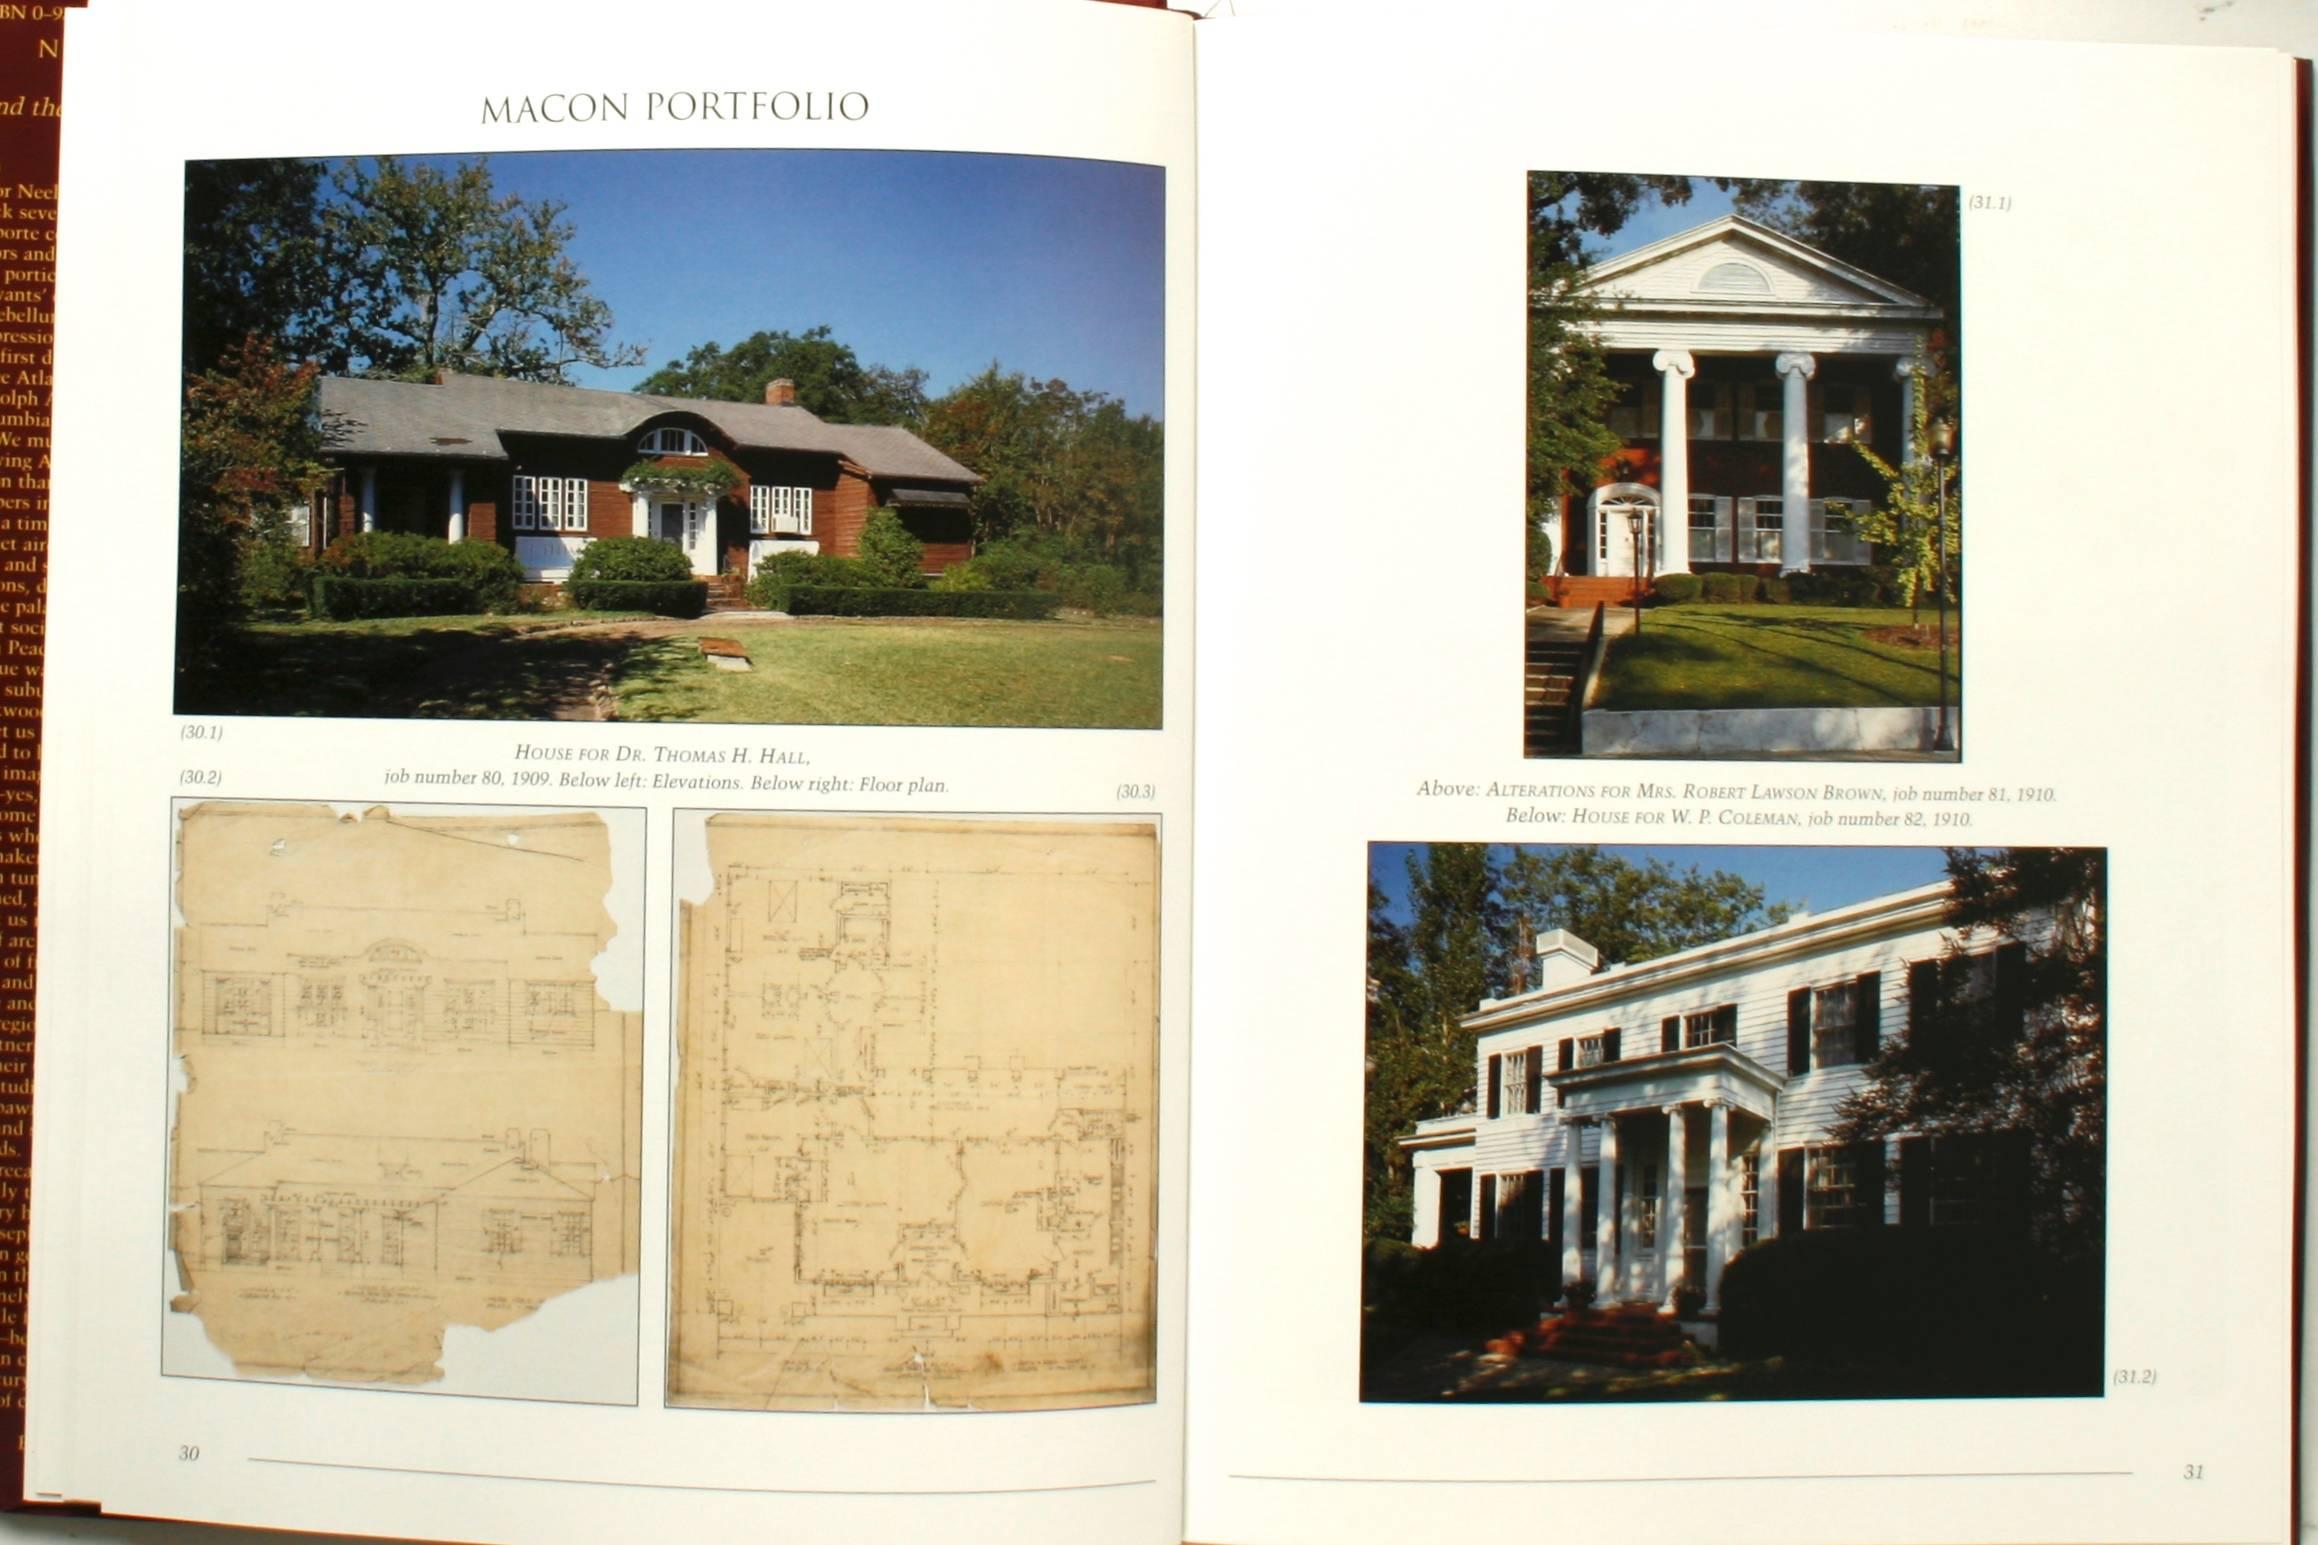 J. Neel Reid Architect by William R. Mitchell, Jr., First Edition 1